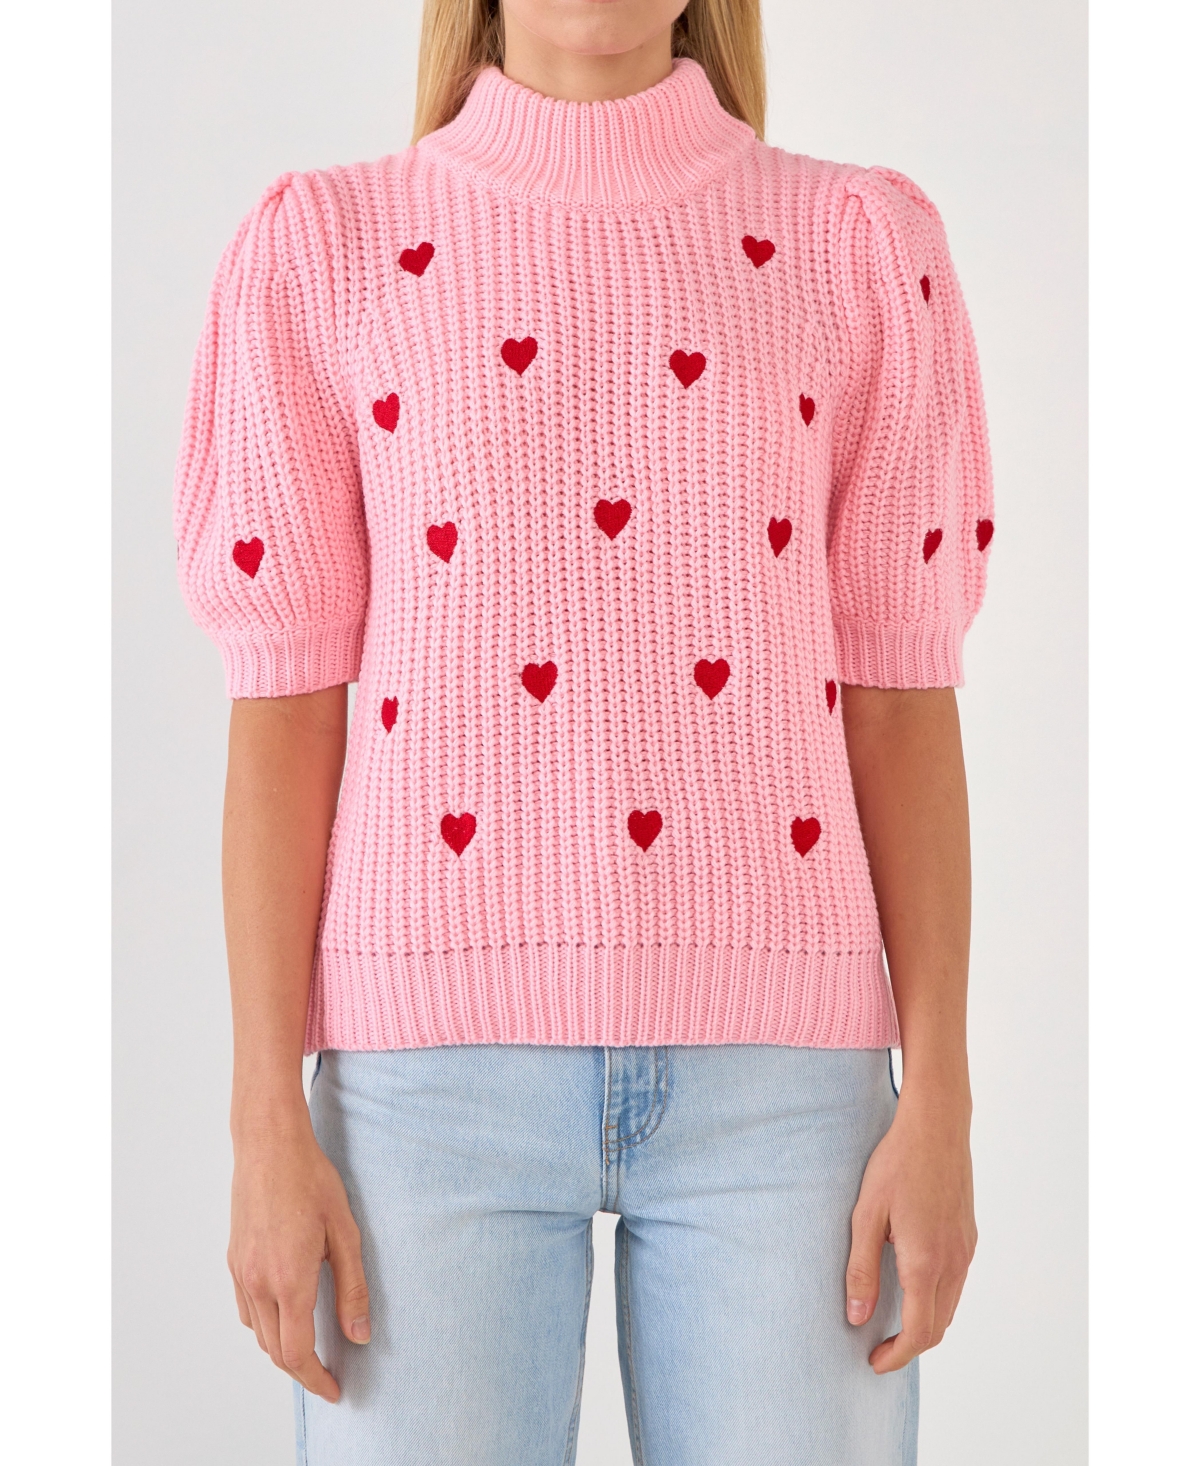 Women's Heart Shape Embroidery Sweater - Pink